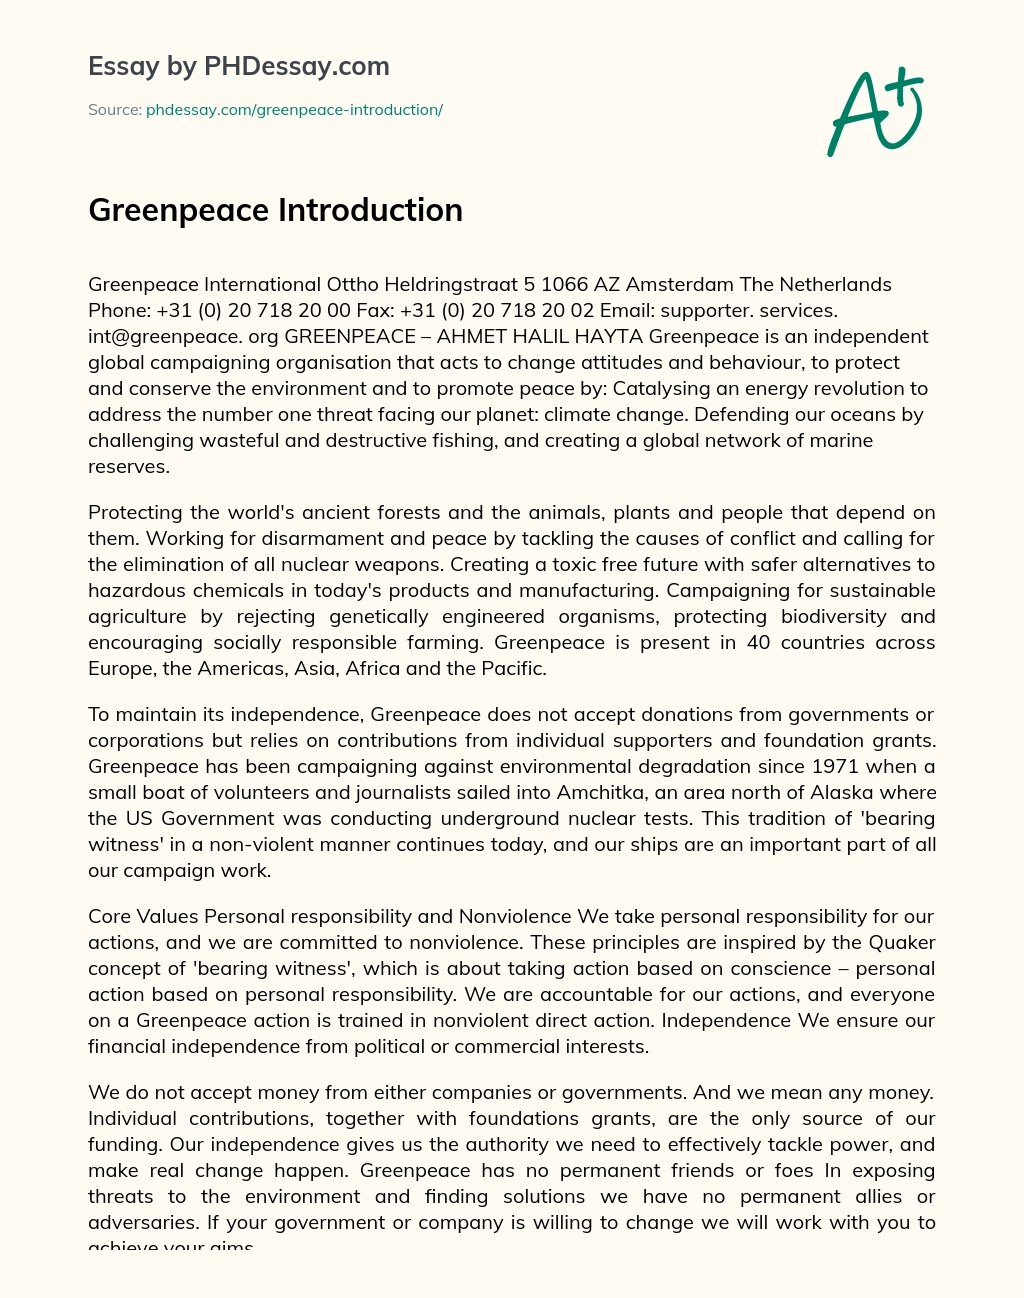 Greenpeace Introduction essay